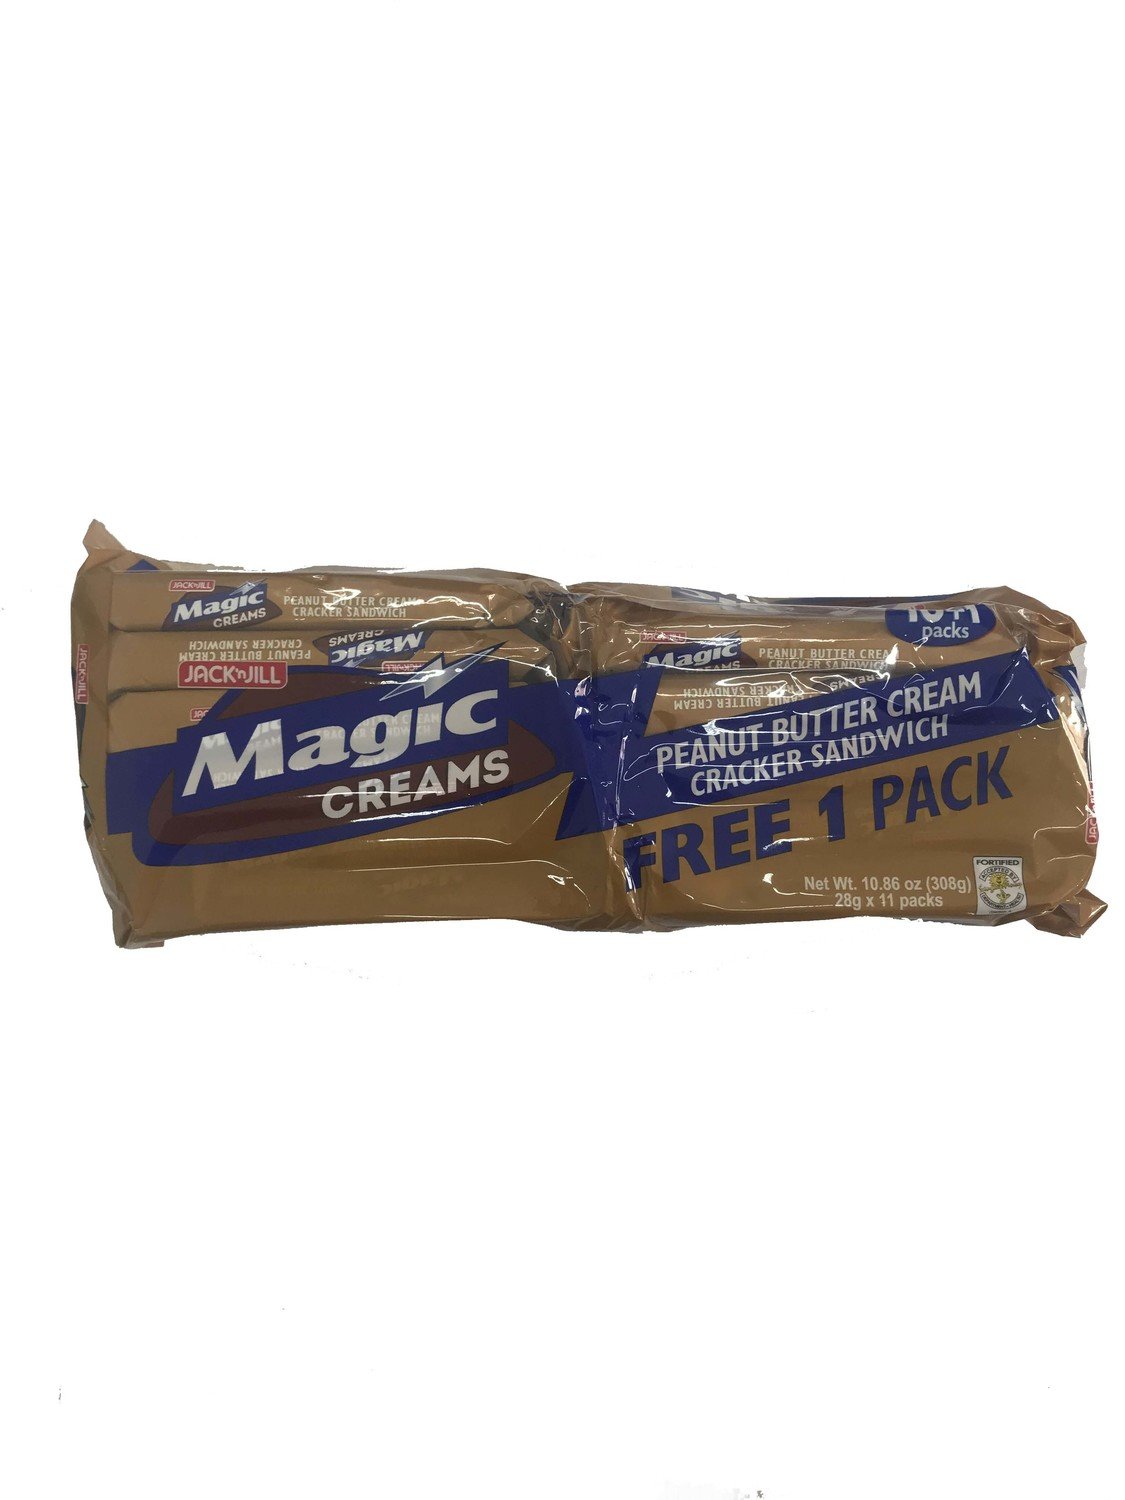 Magic Creams Peanut Butter Cream Cracker Sandwich 28gx11